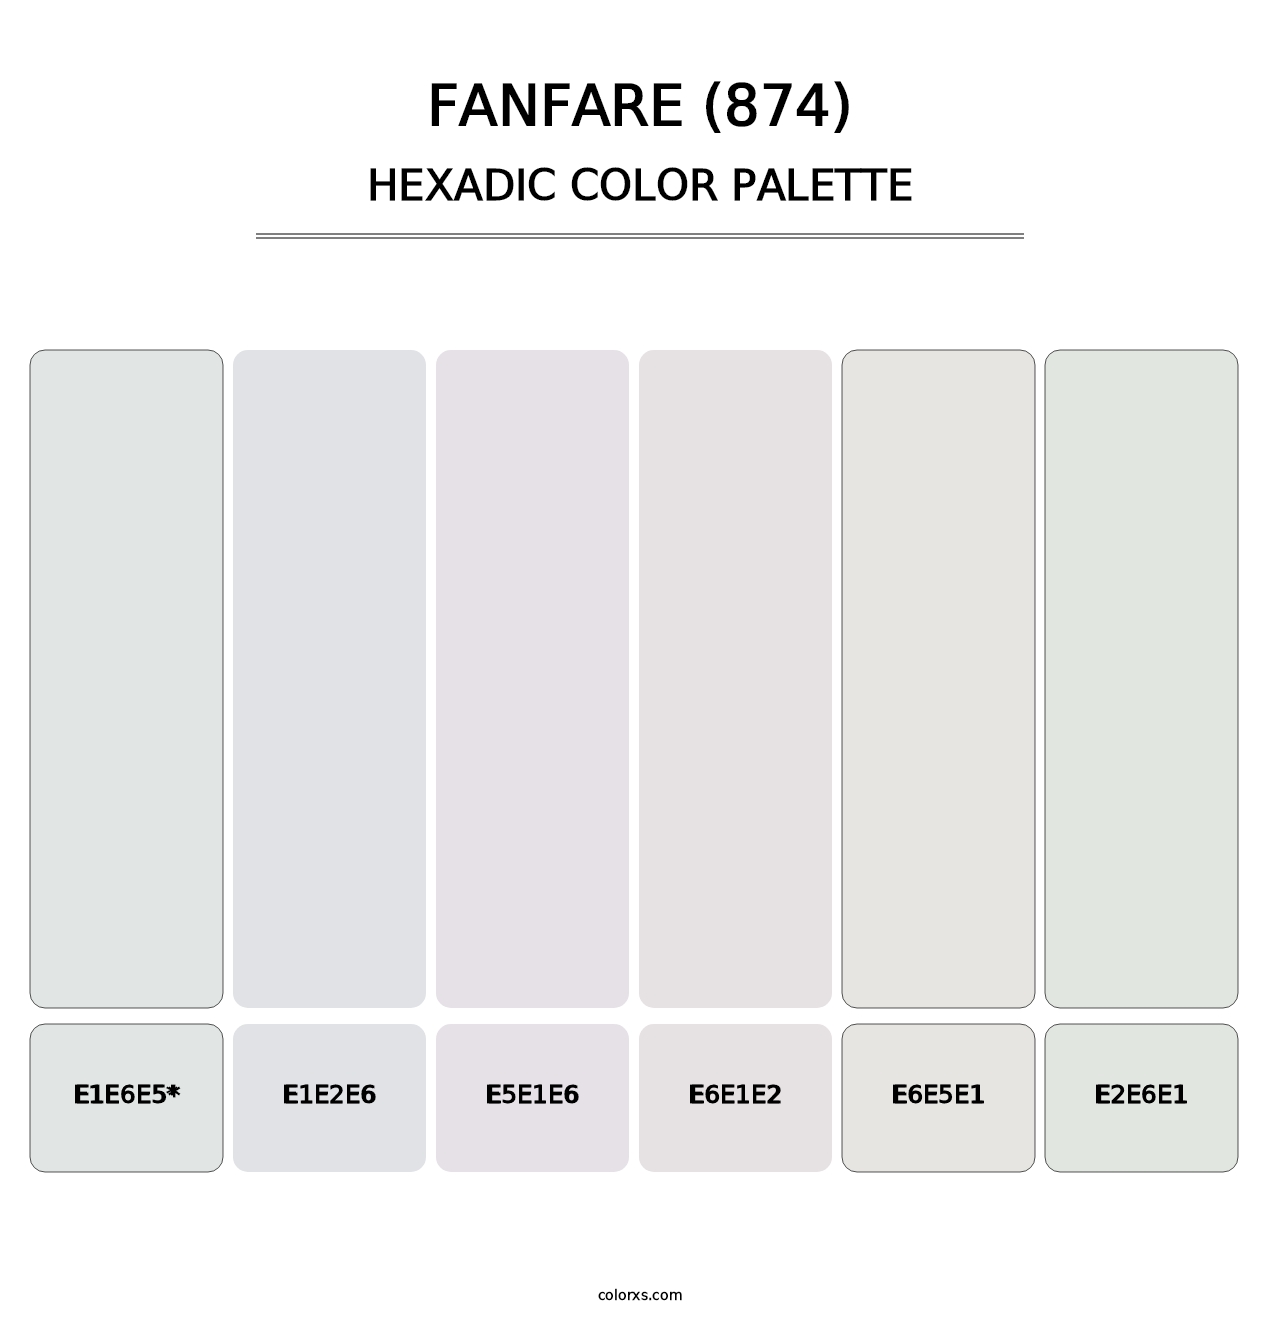 Fanfare (874) - Hexadic Color Palette